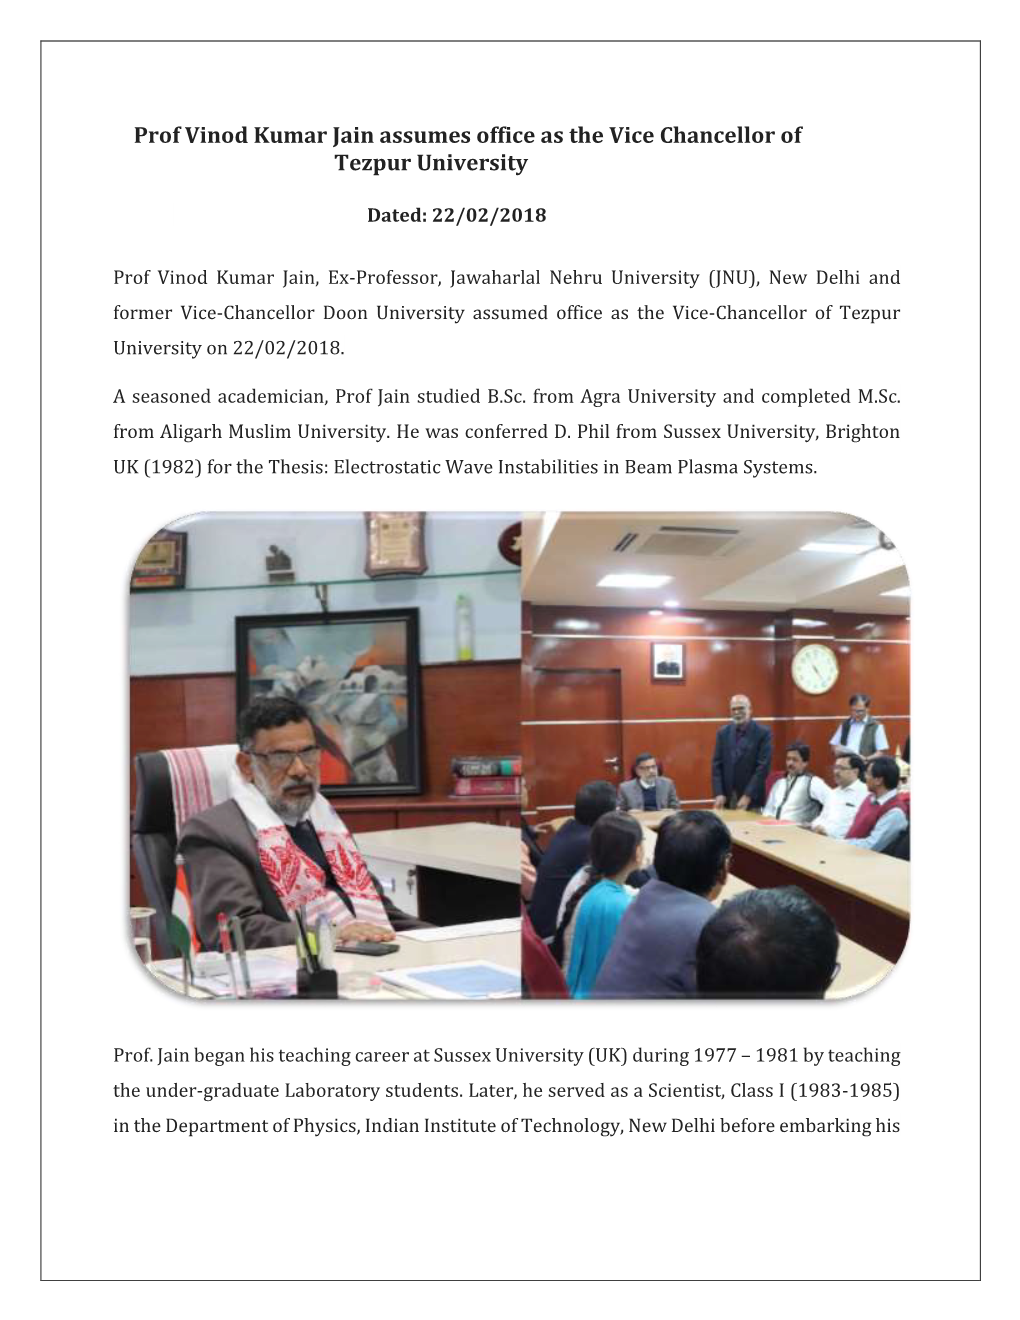 Prof Vinod Kumar Jain Assumes Office As the Vice Chancellor of Tezpur University